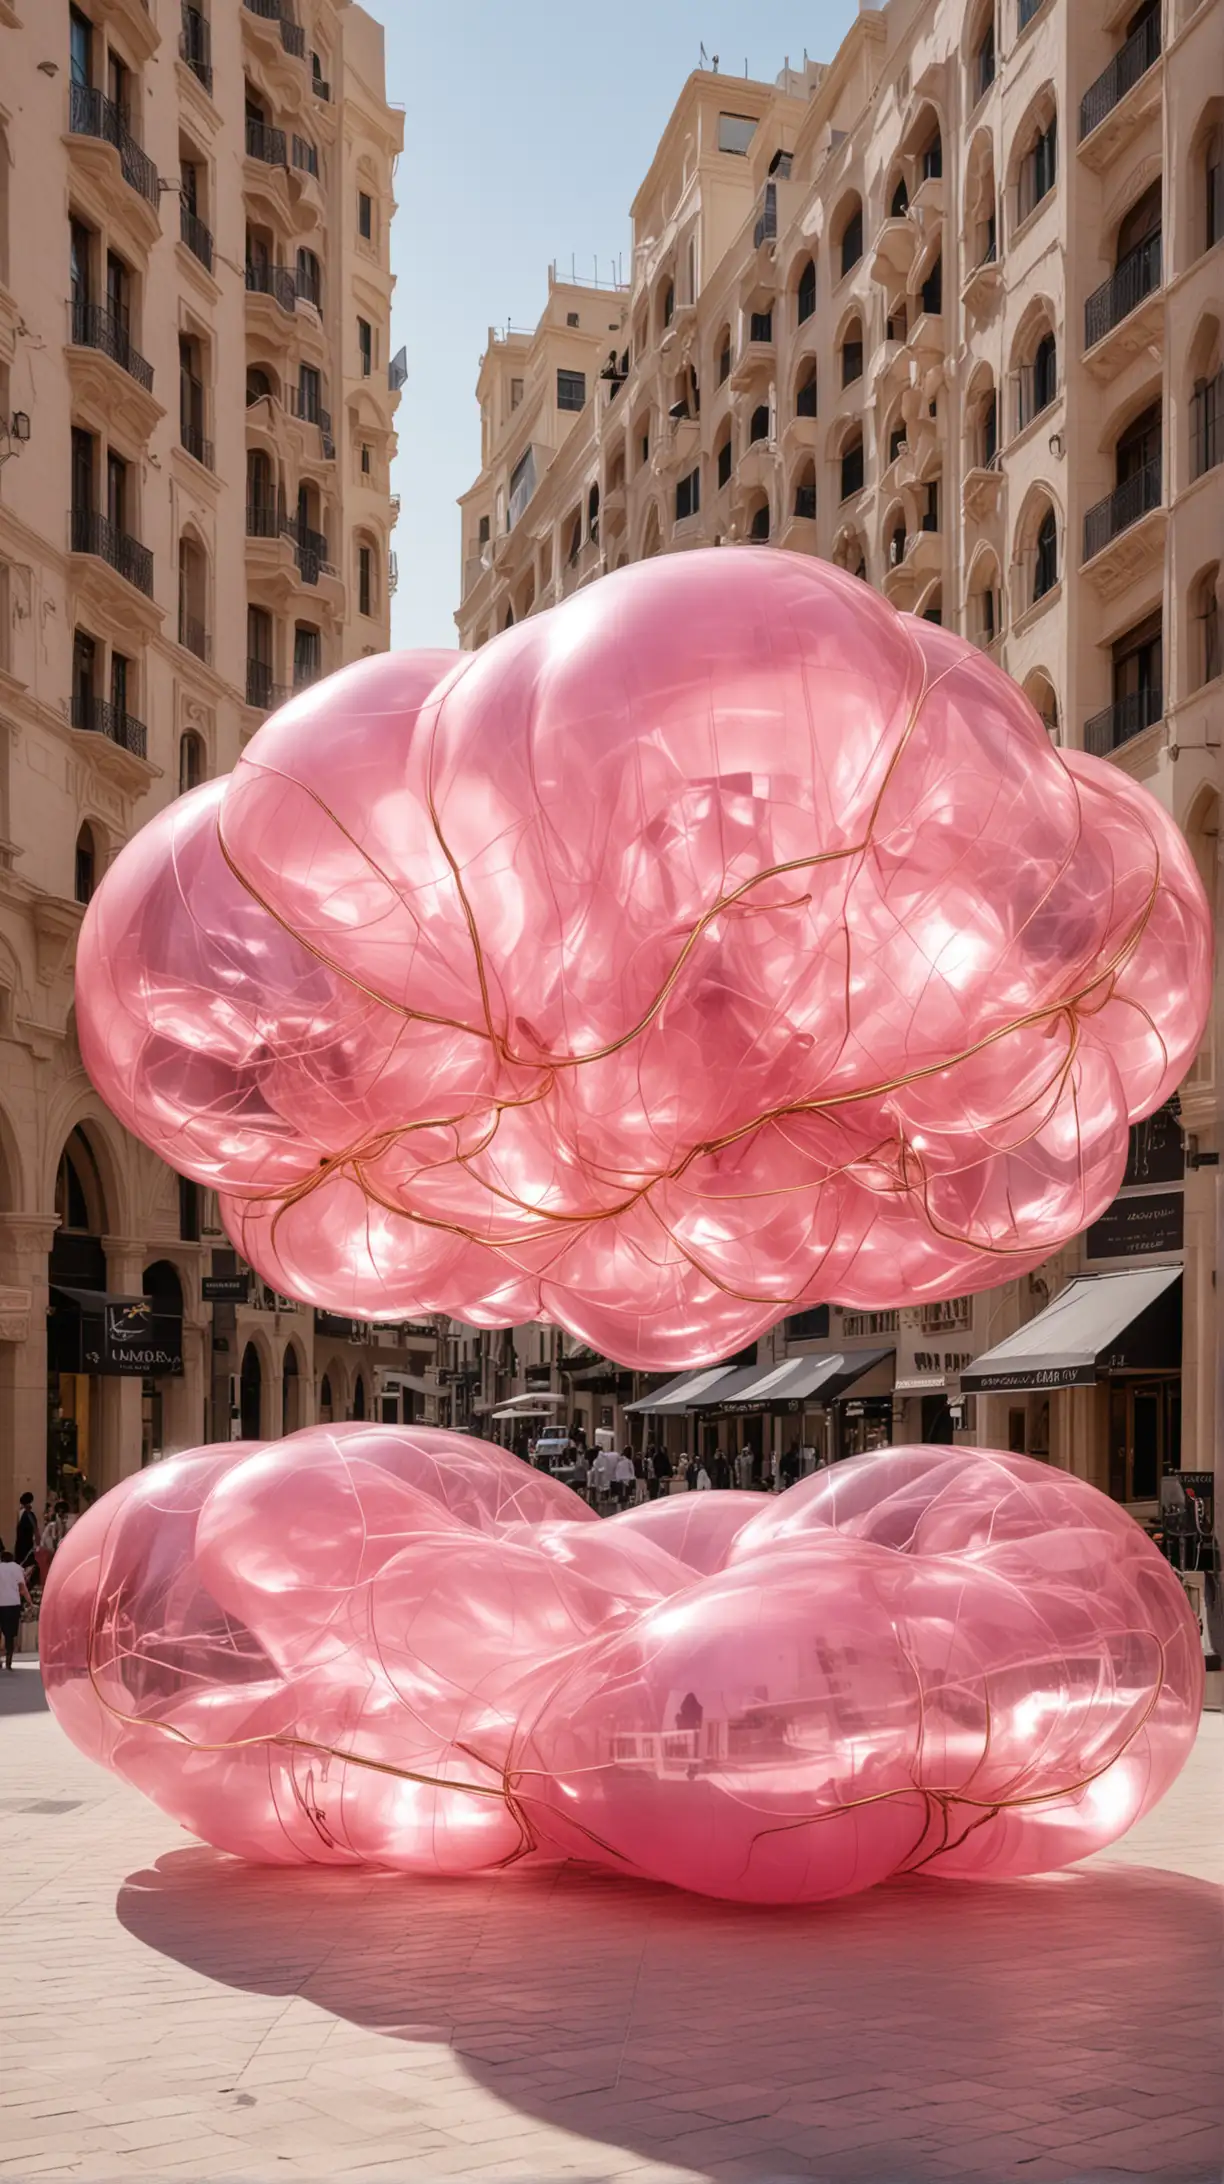 Pink Gold Inflatable Cloud Sculpture in Zaha Hadid Style Dubai Street